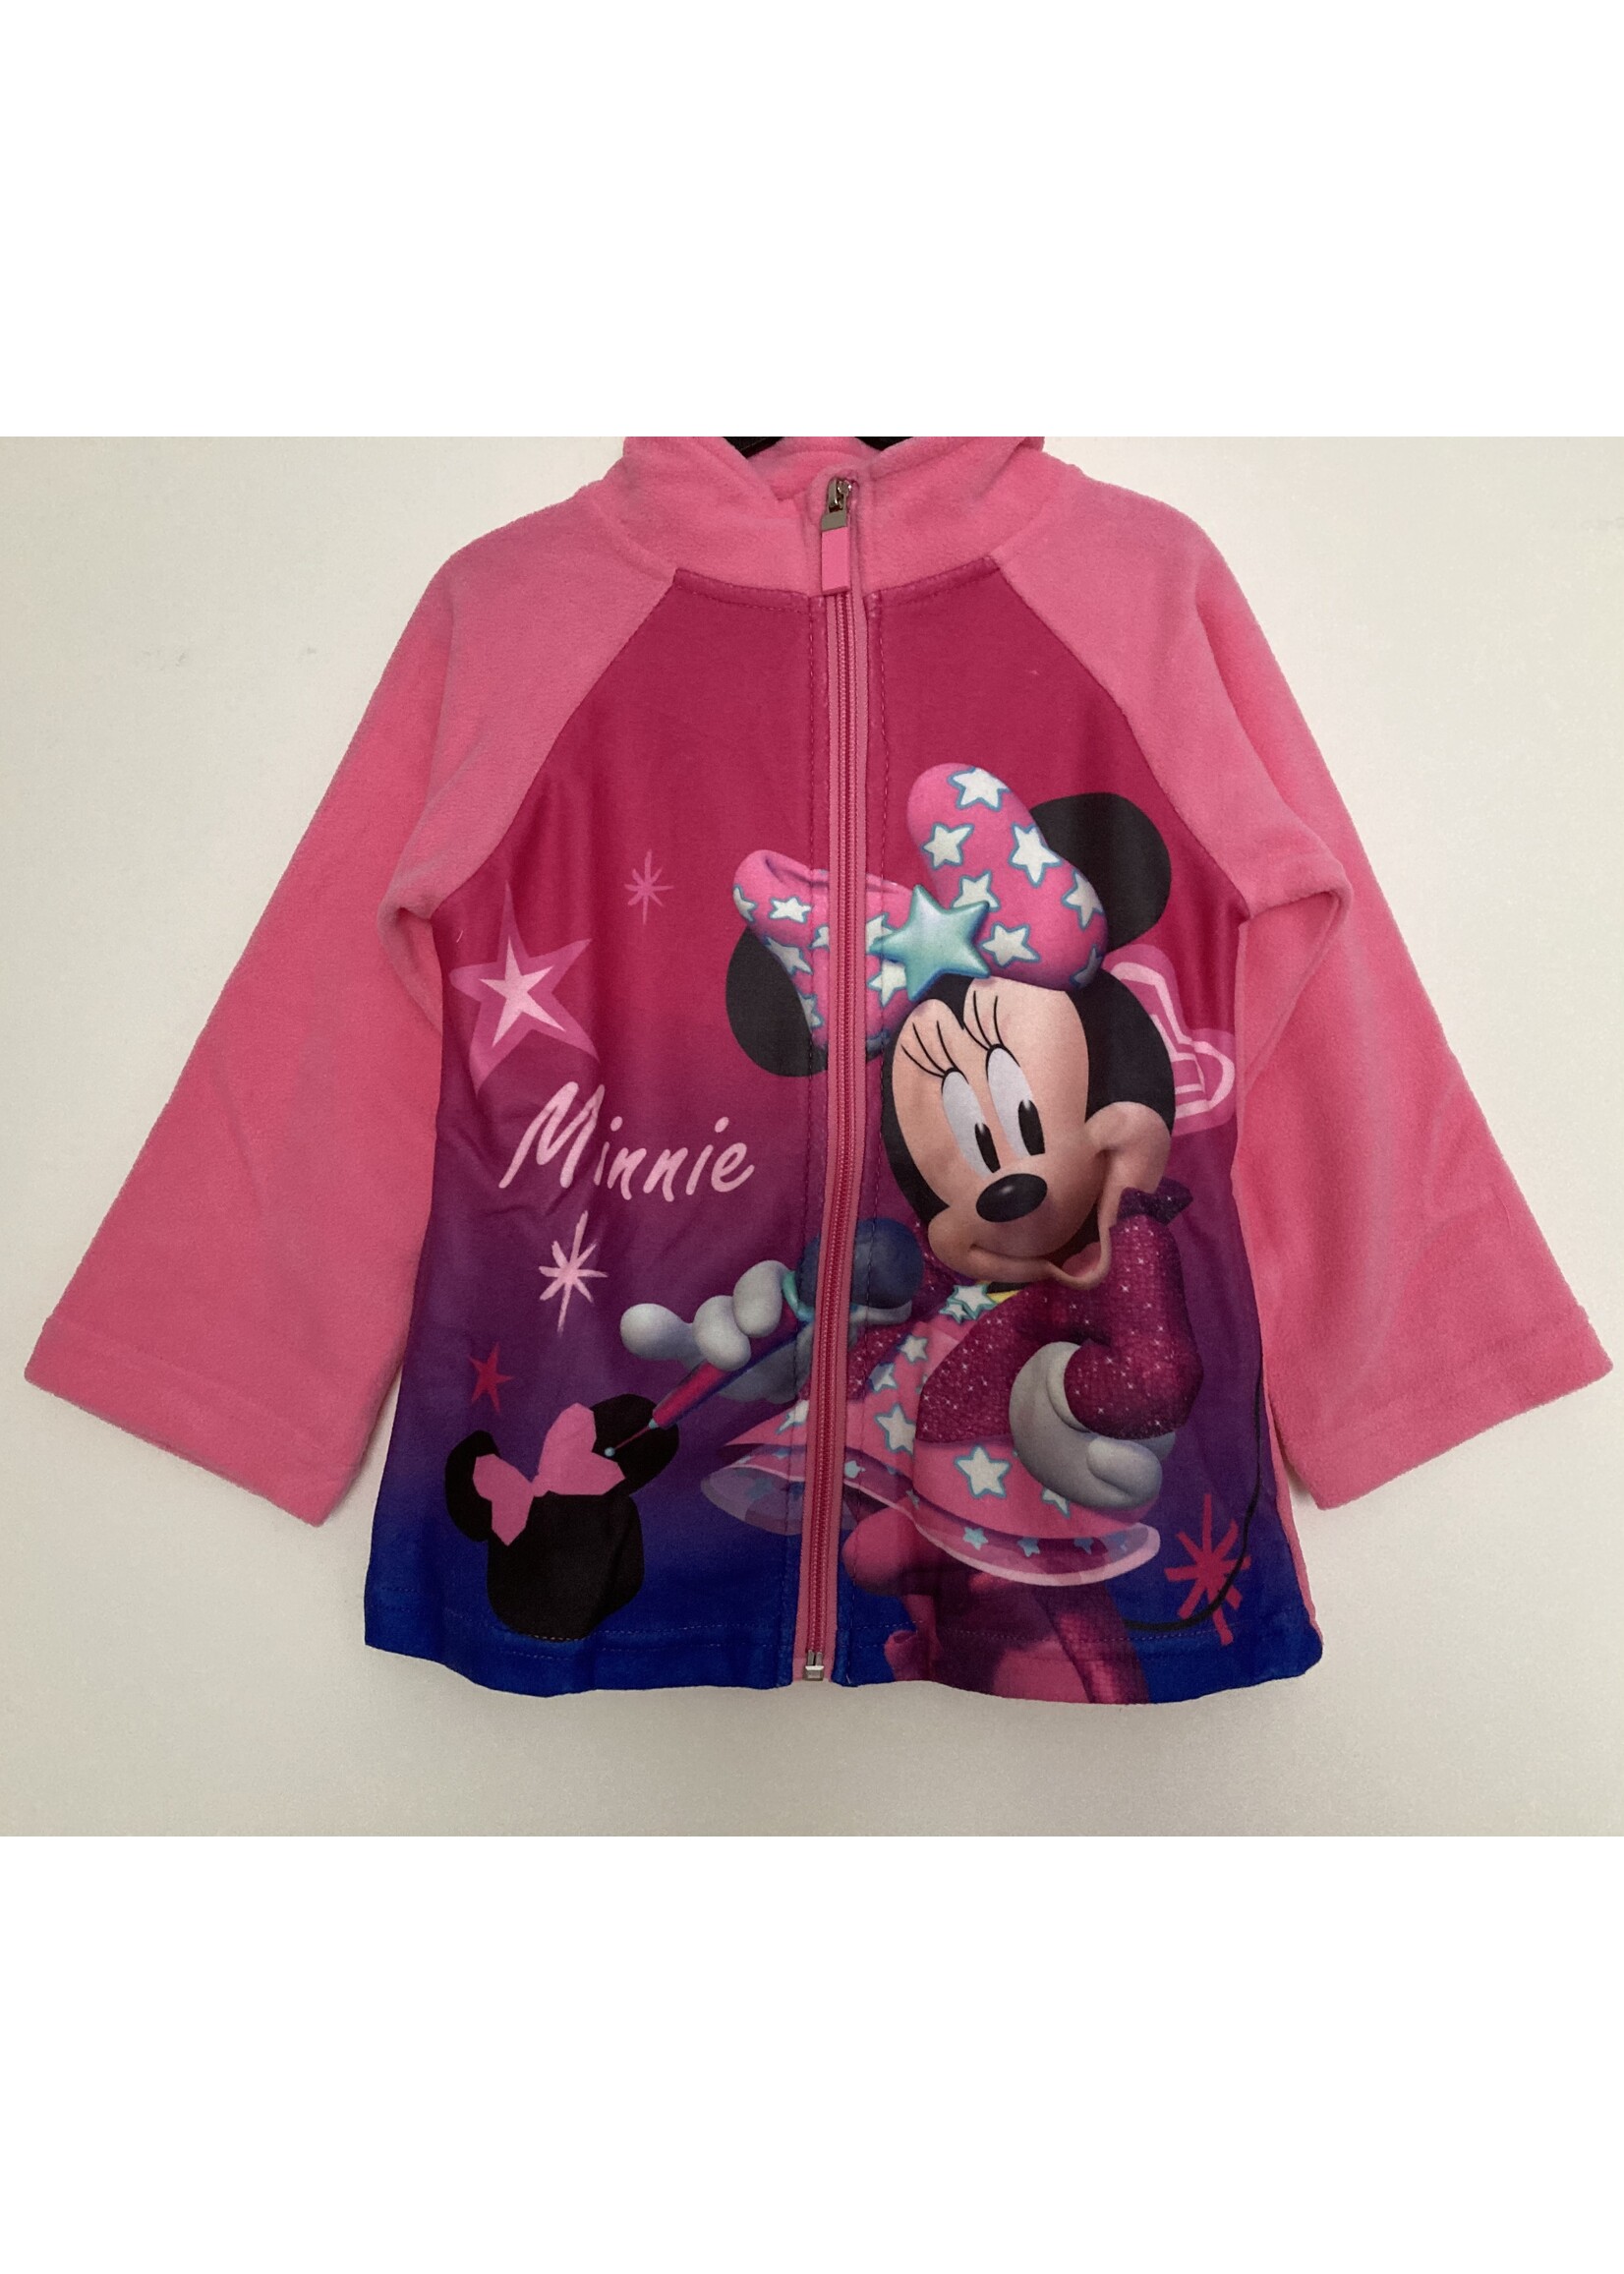 Disney junior Minnie Mouse fleece cardigan from Disney light pink